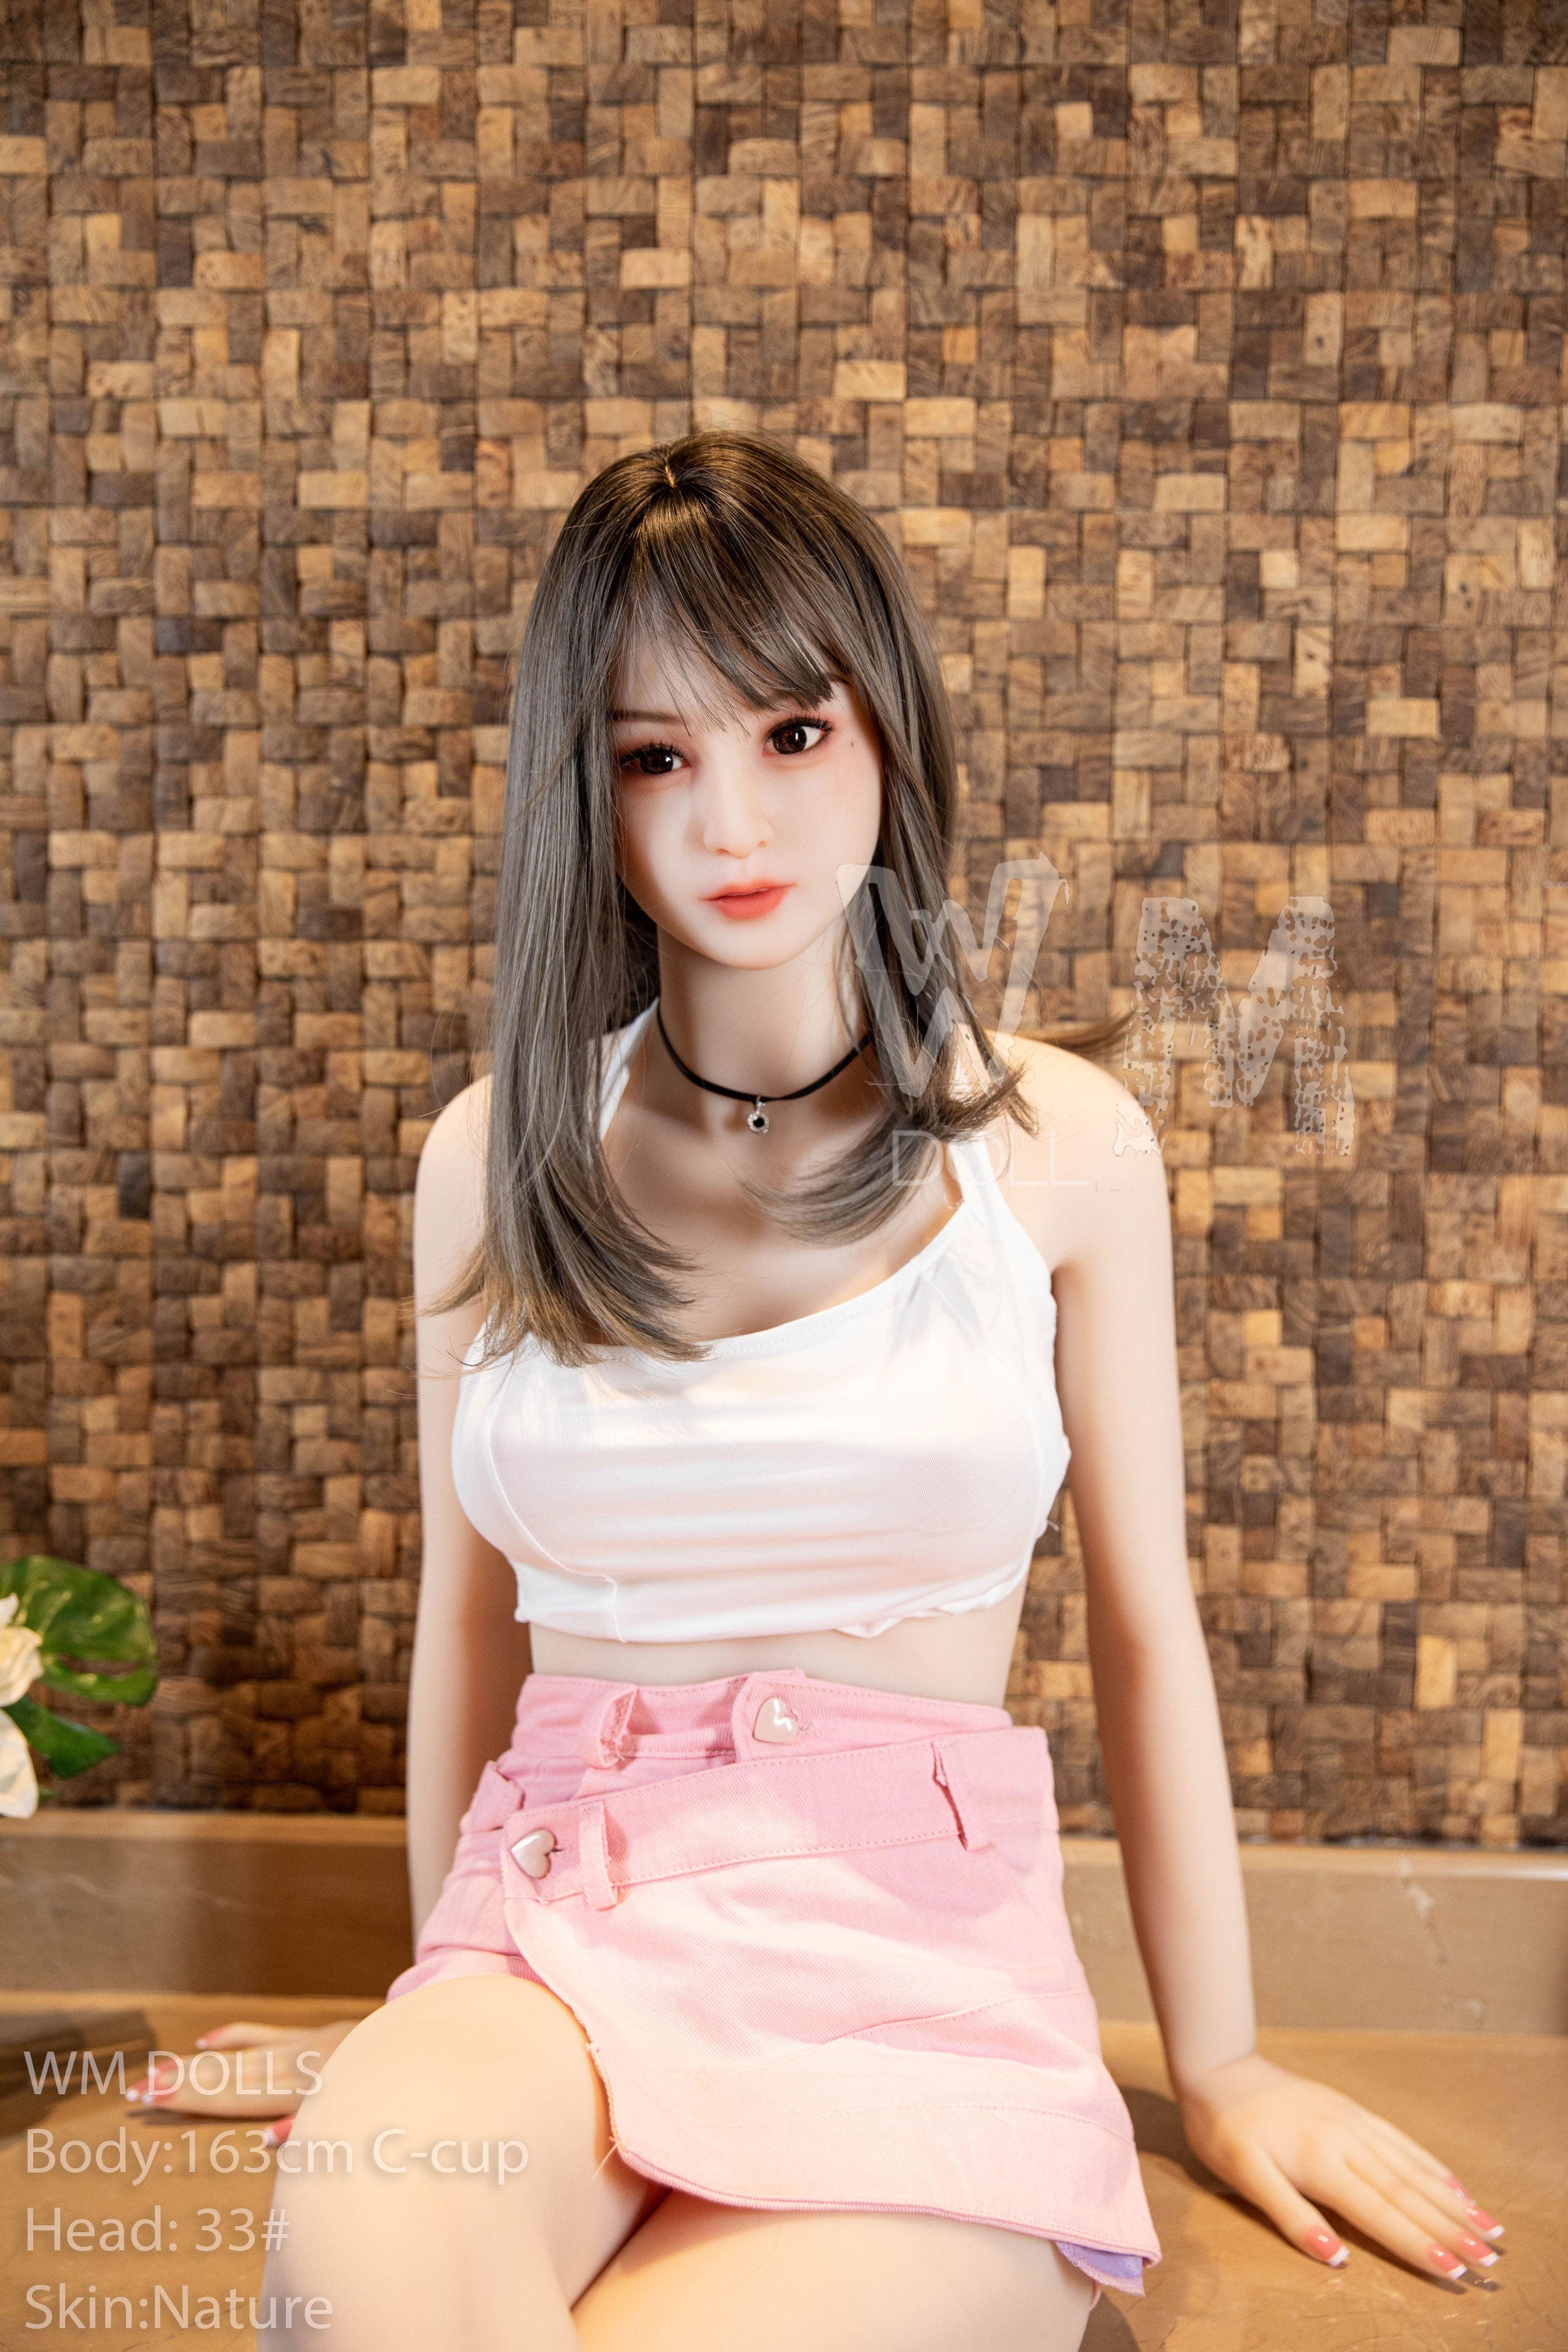 WM Doll 163 cm C Fusion - Remi | Buy Sex Dolls at DOLLS ACTUALLY